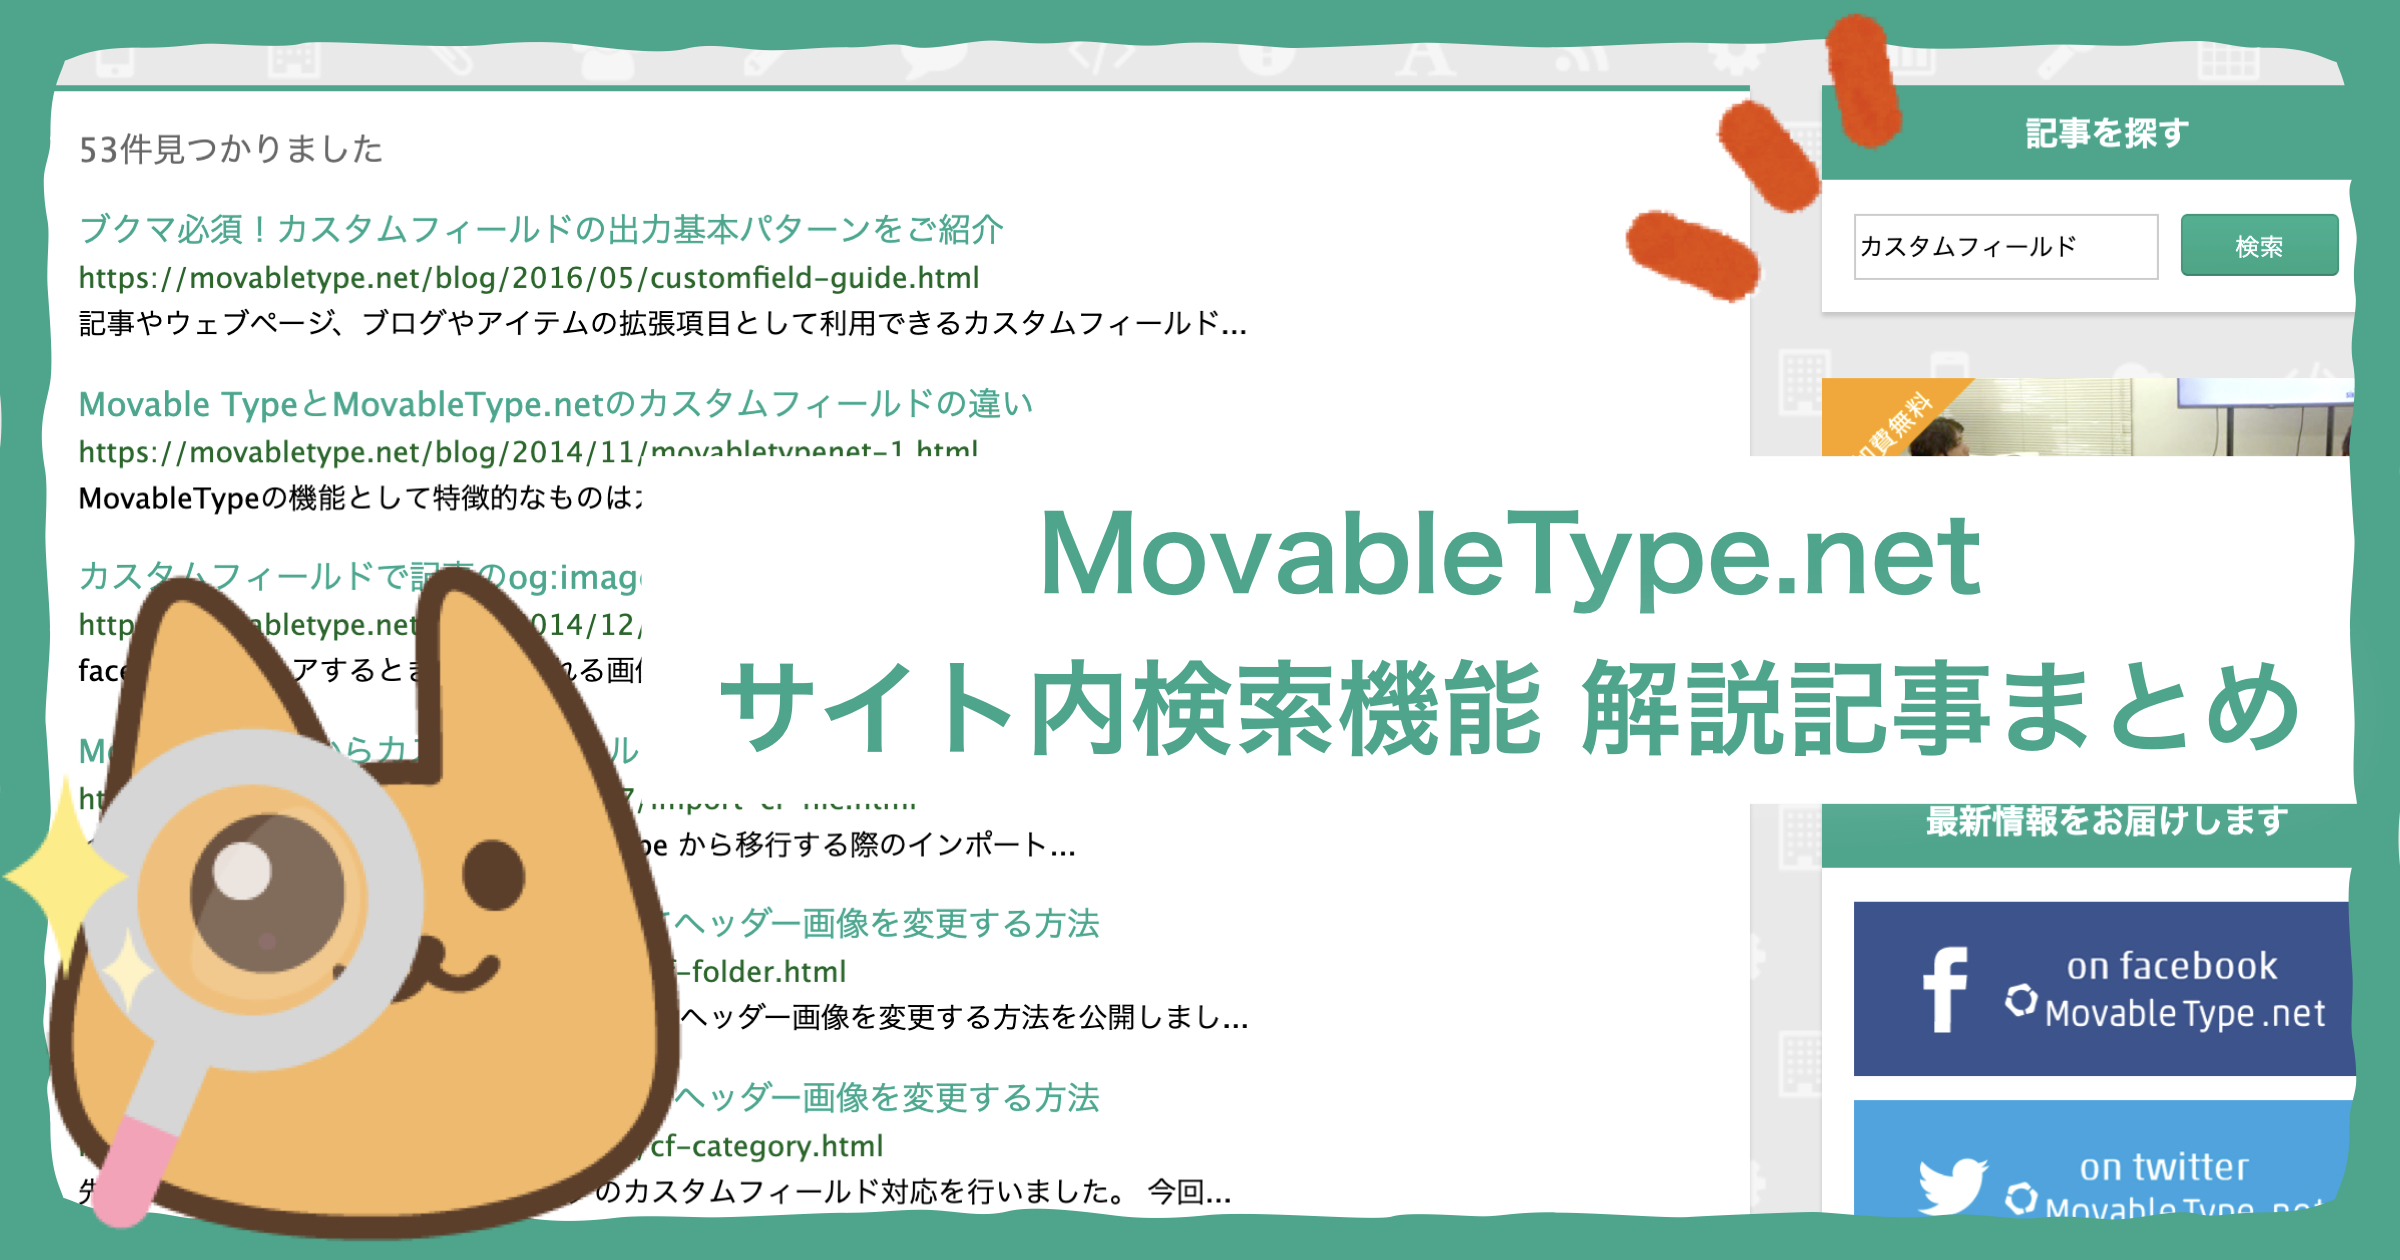 MovableType.net サイト内検索機能の解説記事まとめ [ほぼ週刊SA]